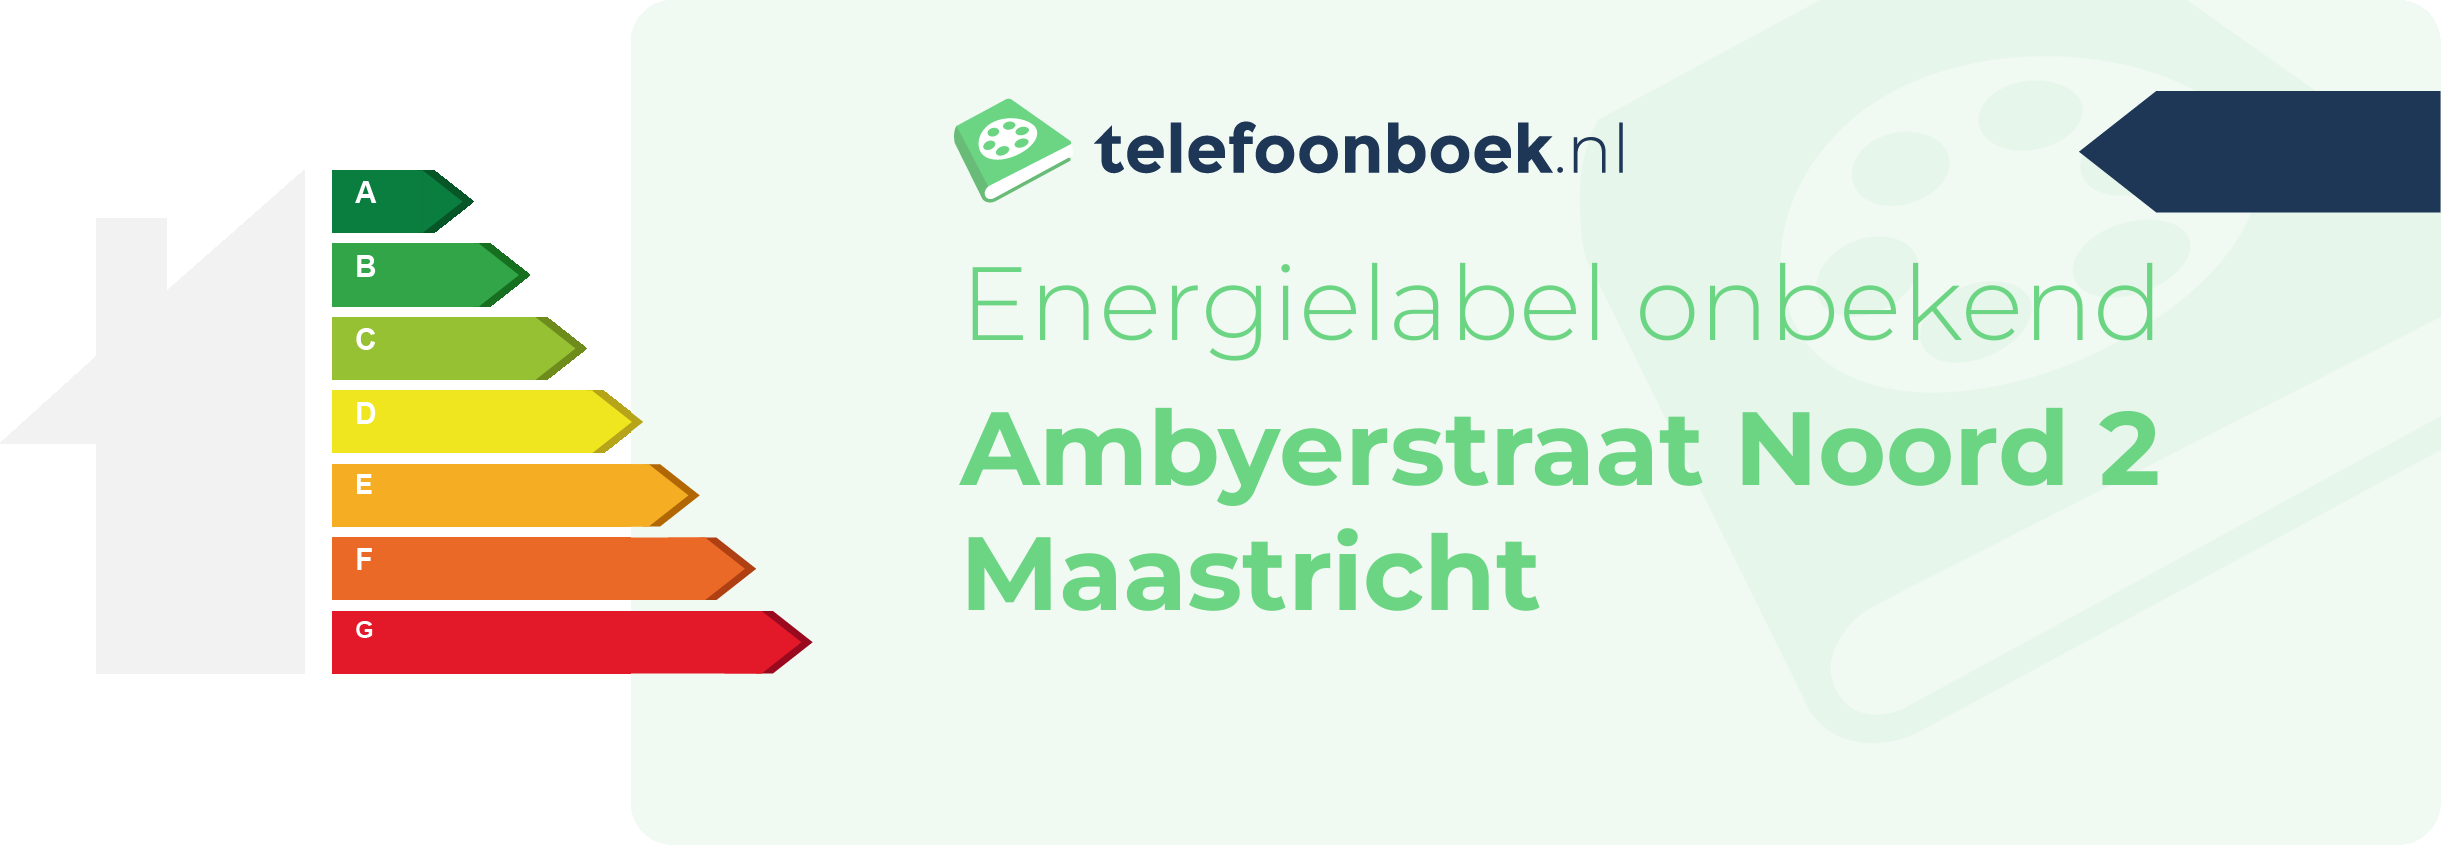 Energielabel Ambyerstraat Noord 2 Maastricht